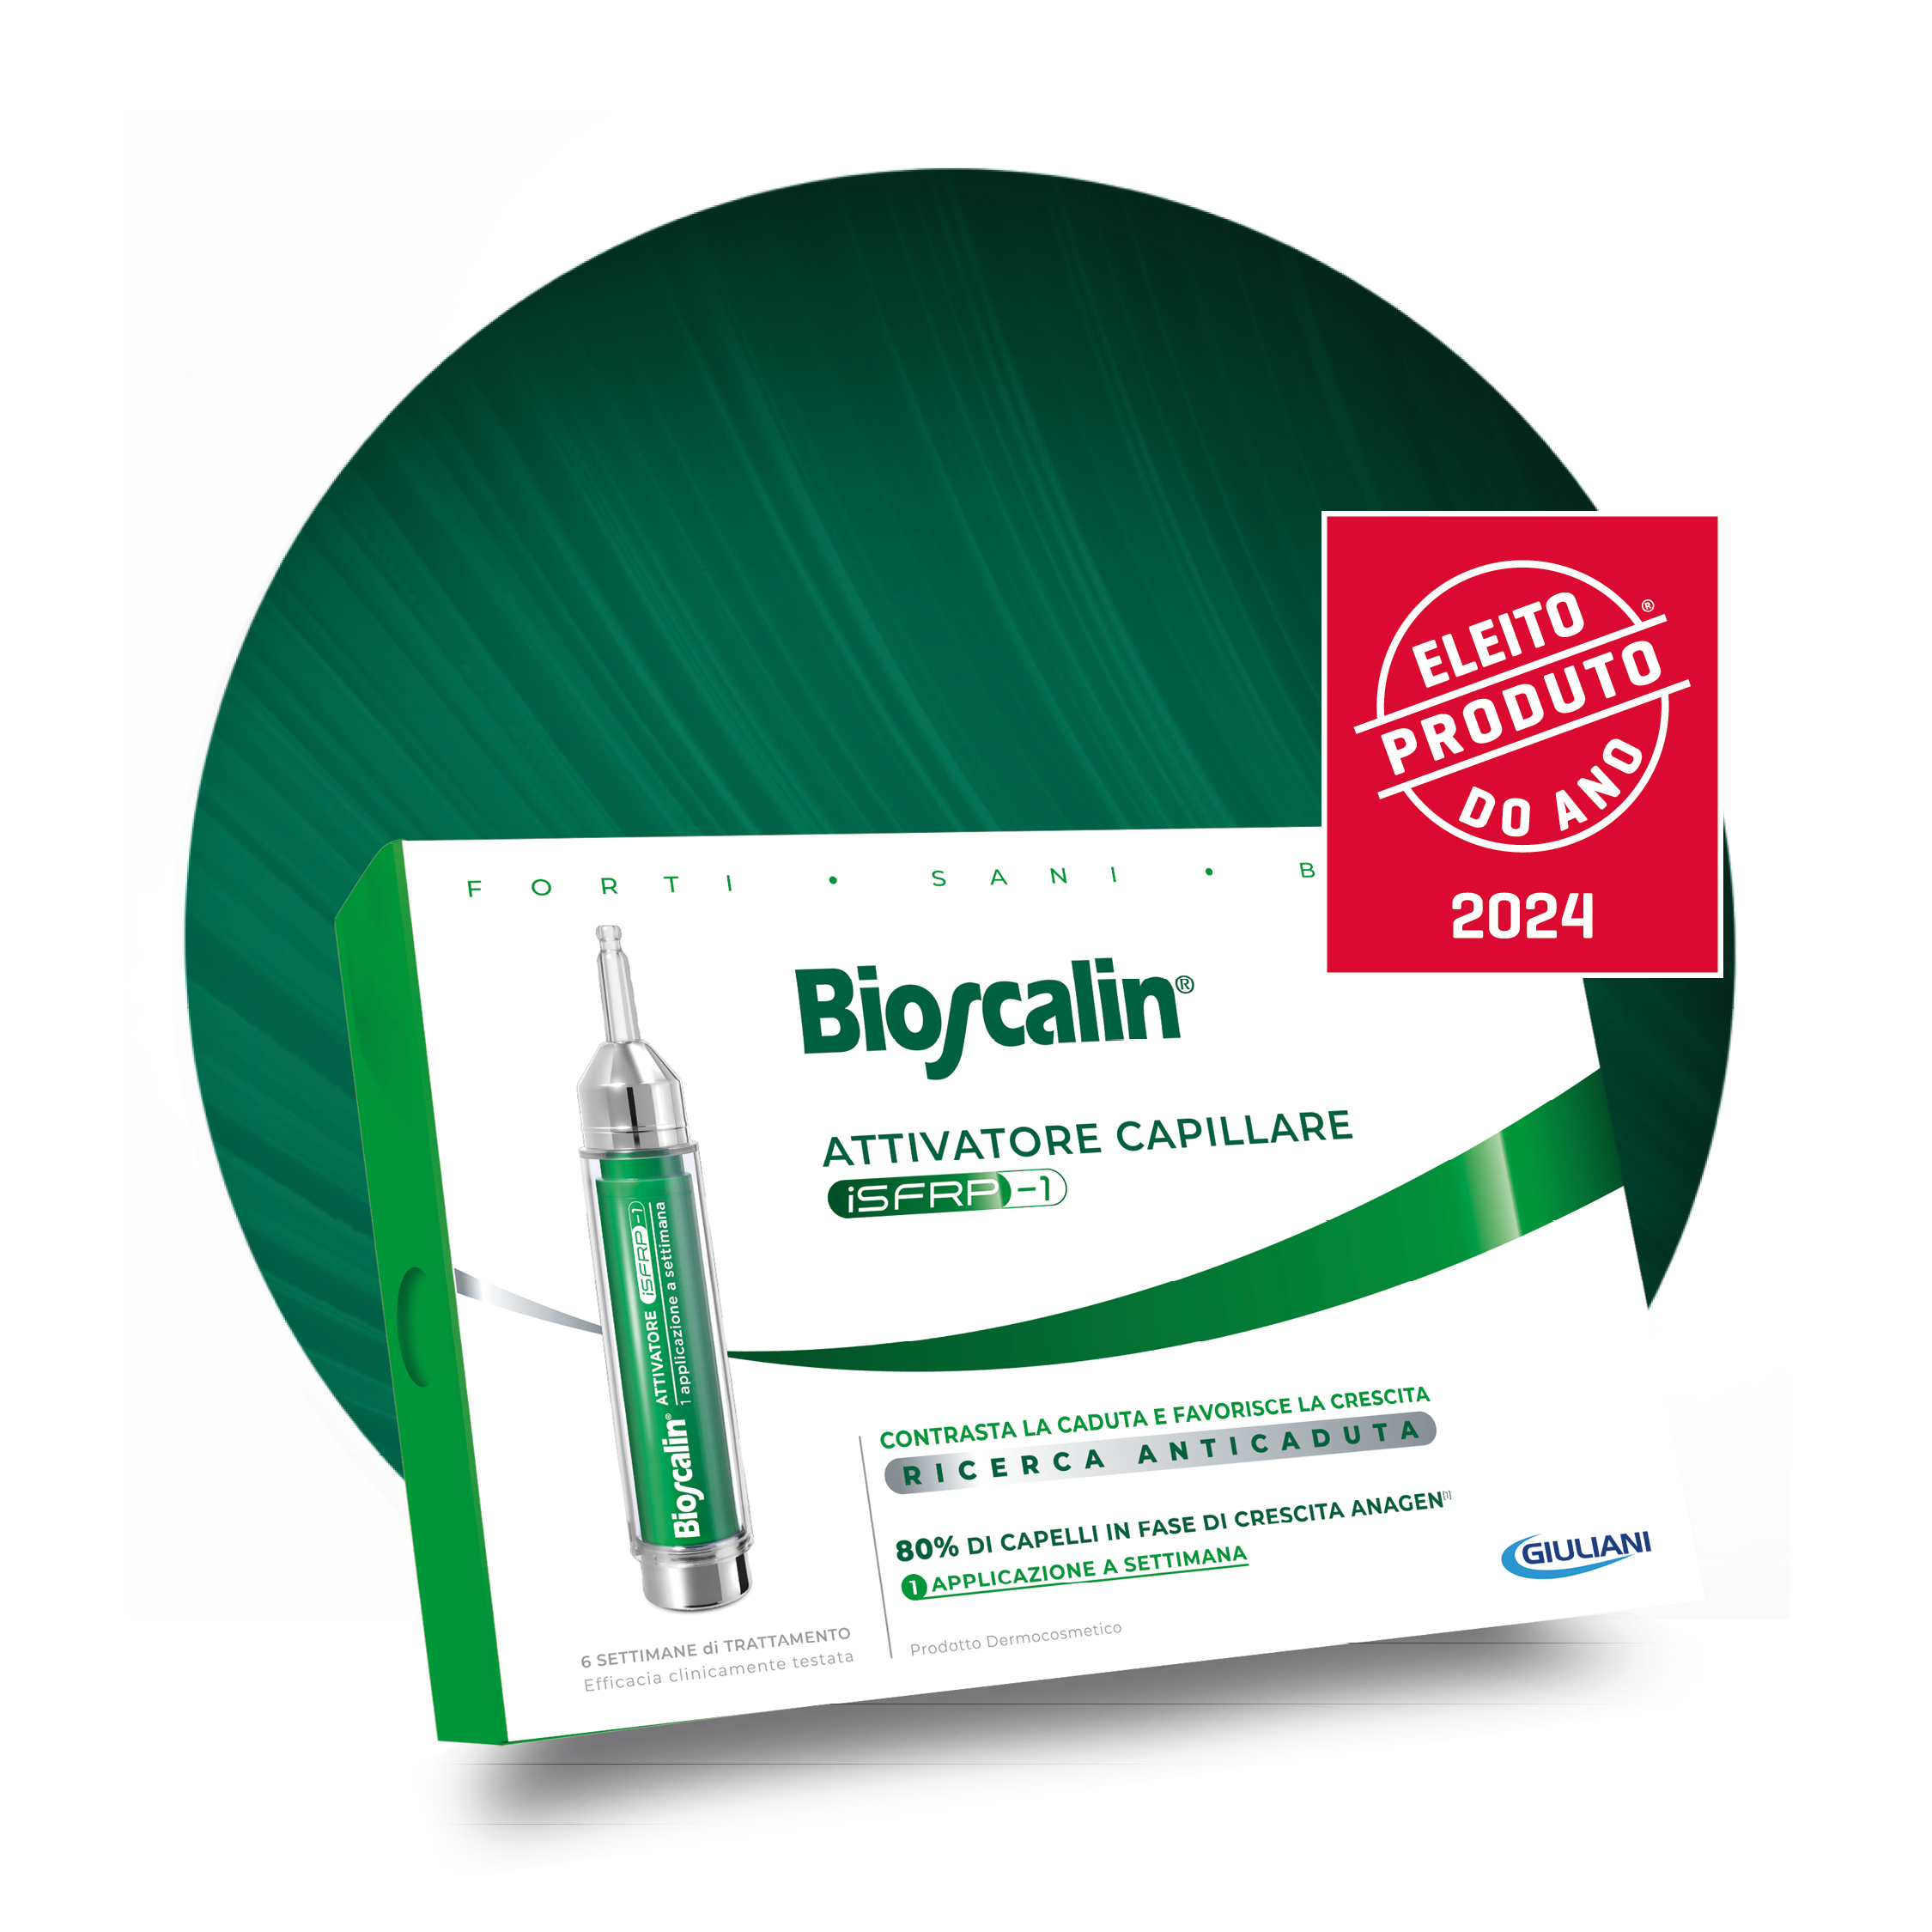 Bioscalin Ativador Capilar